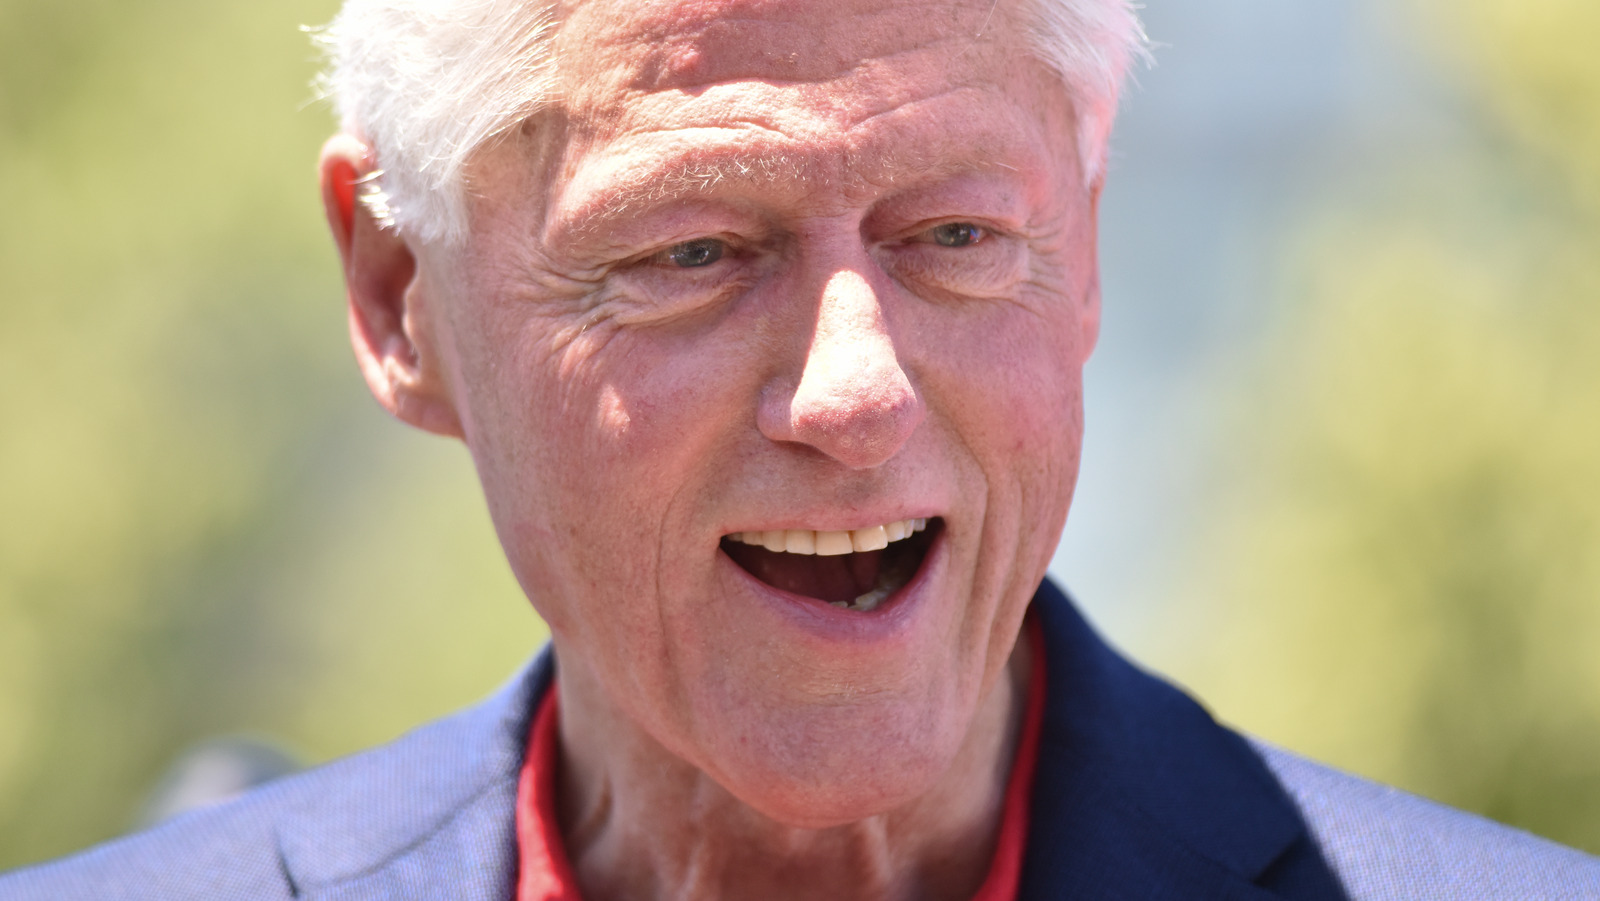 Bill Clinton Appears In Elden Ring After Bizarre TGA Moment